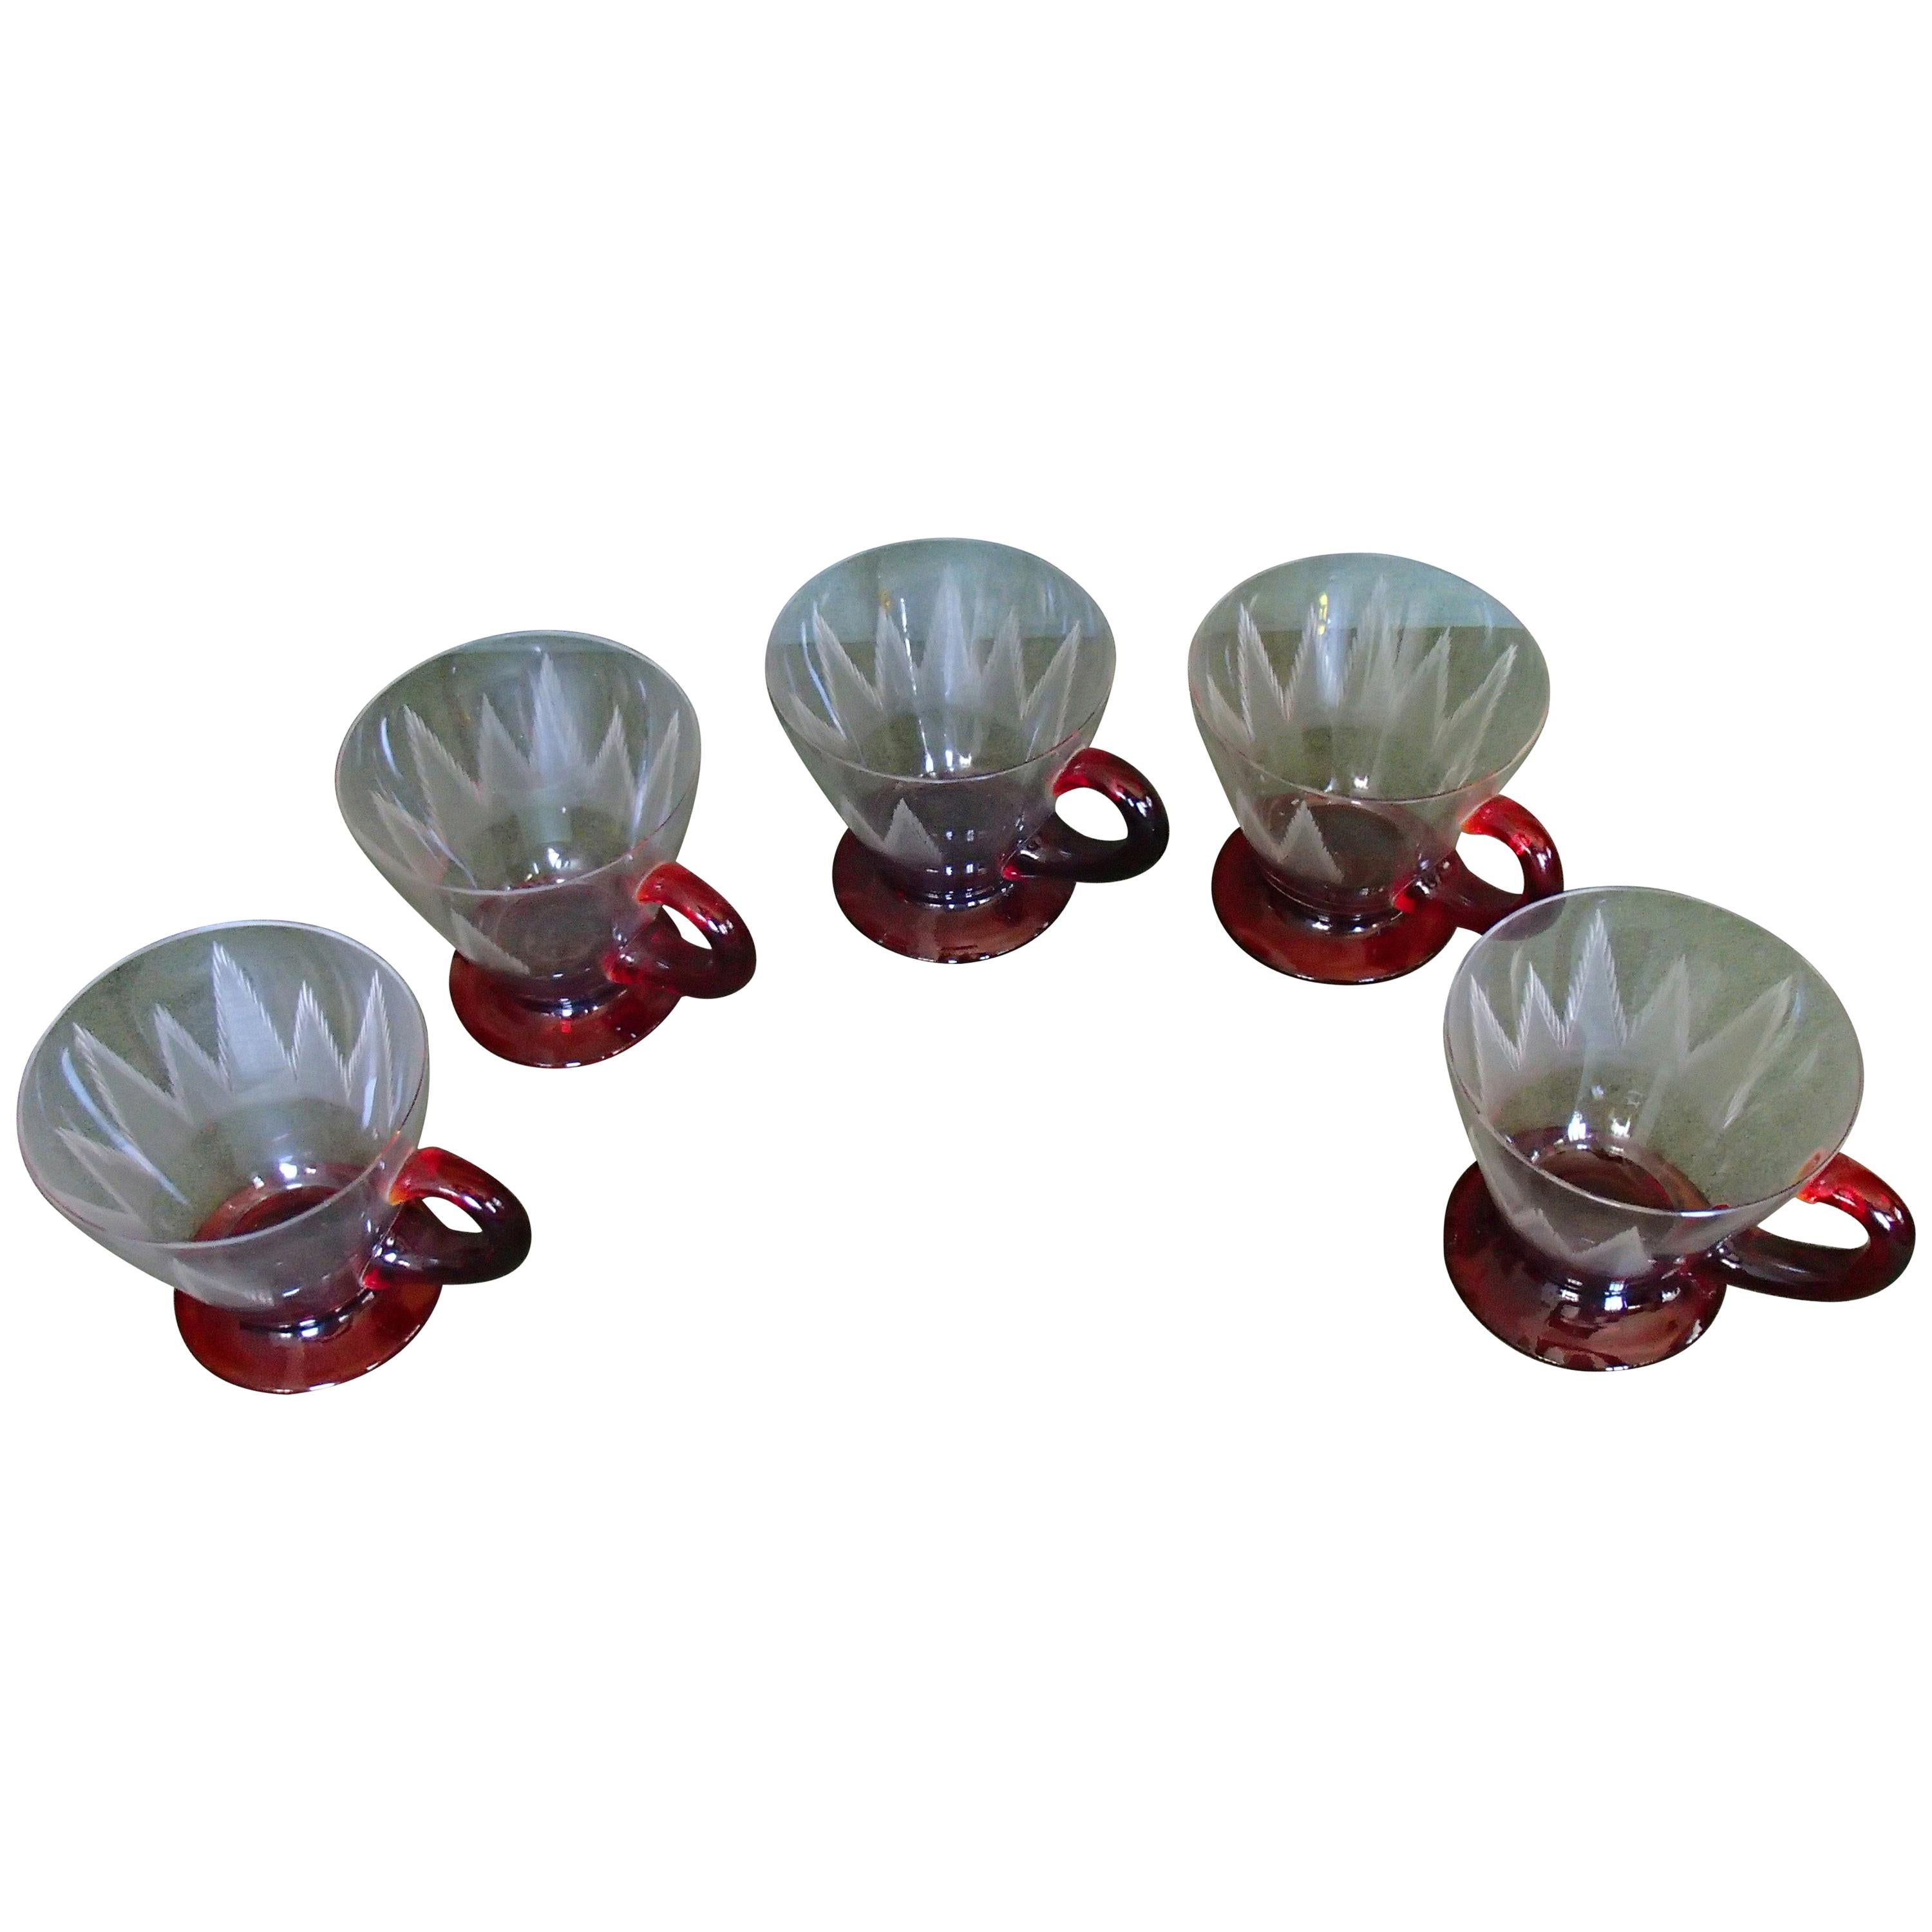 5 Jugendstil-Teegläser mit rotem Sockel und eingraviertem Halter